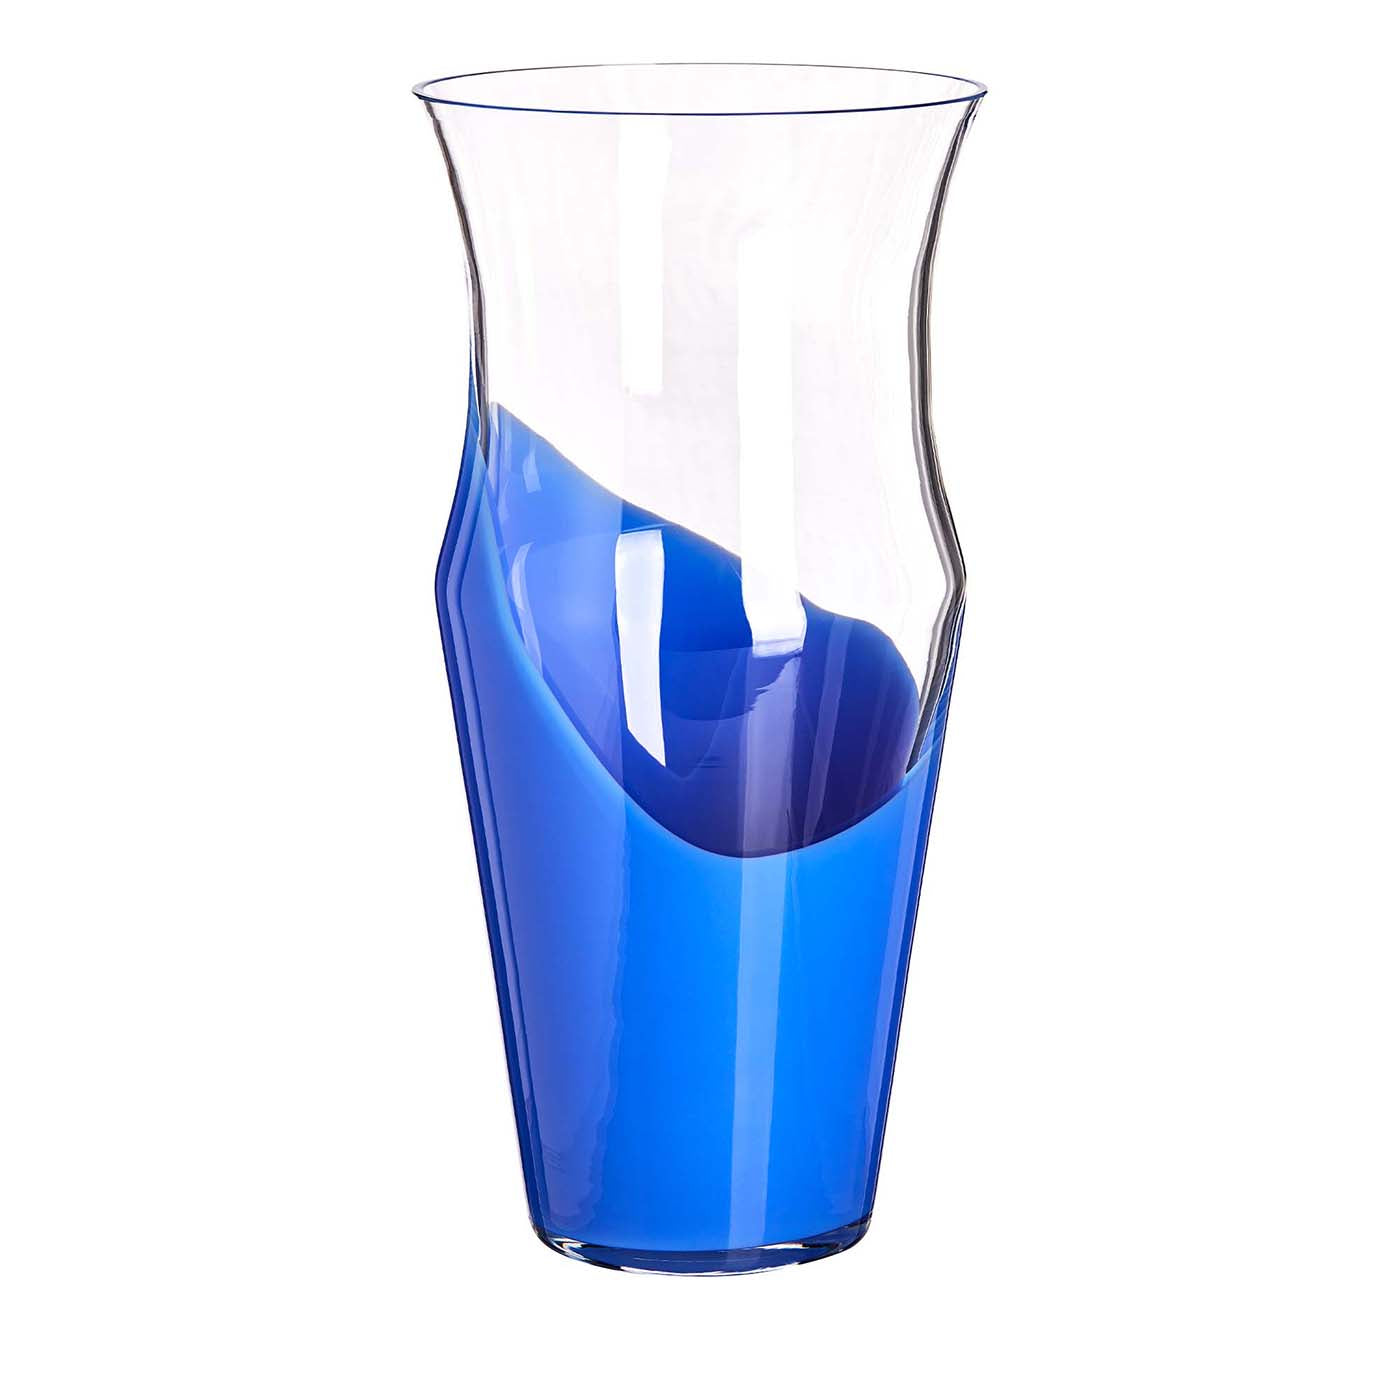 Vase Monocromo bleu et transparent de Carlo Moretti - Vue principale